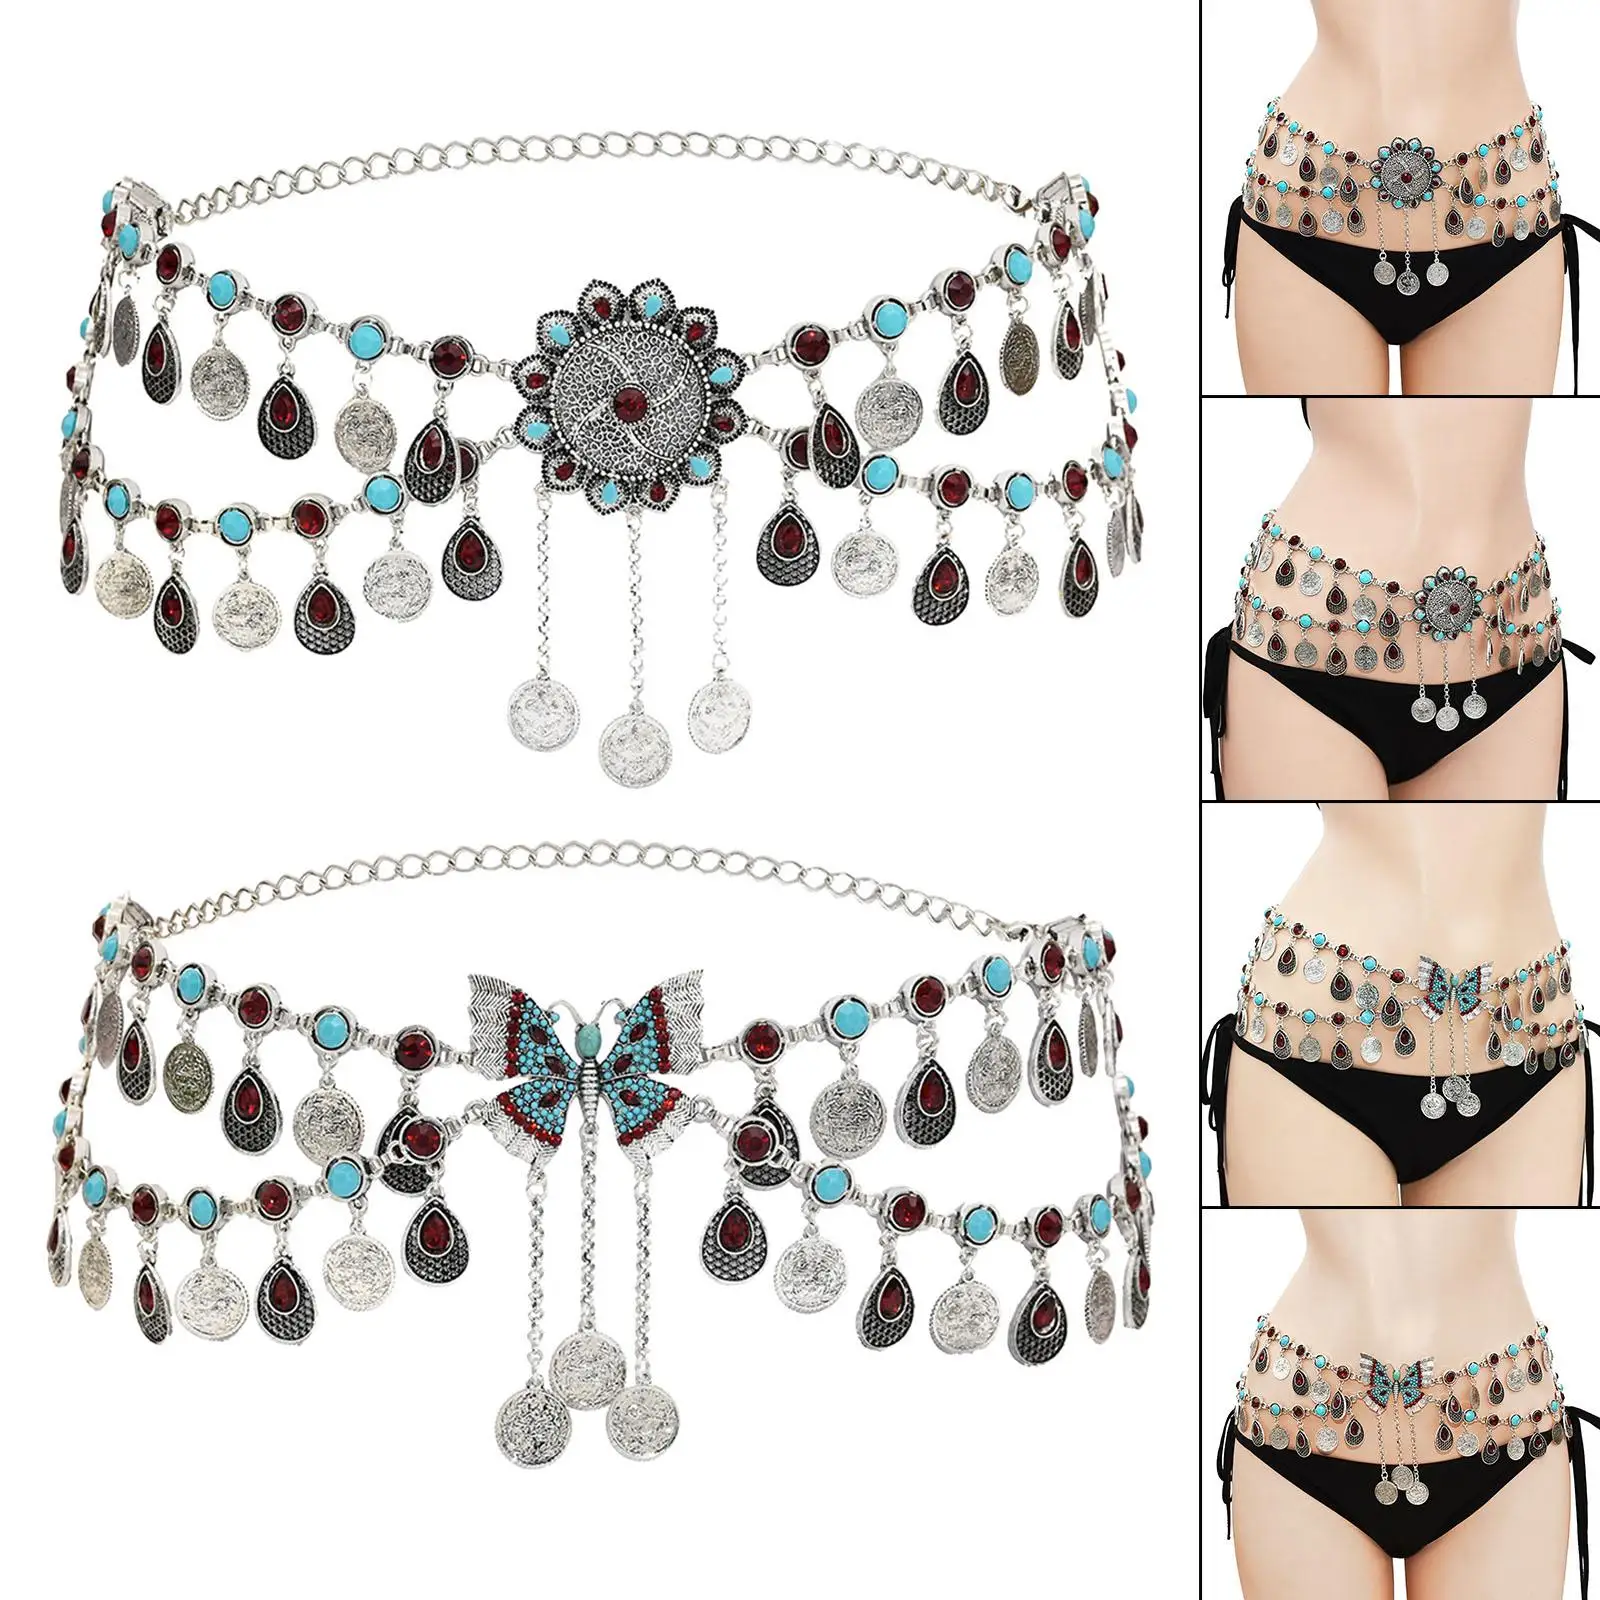 Belly Body Chain Waist Chain Jewelry Silver Color Coin Tassels Pendant Costume Rhinestone Turkish Gypsy Beach Belt for Women